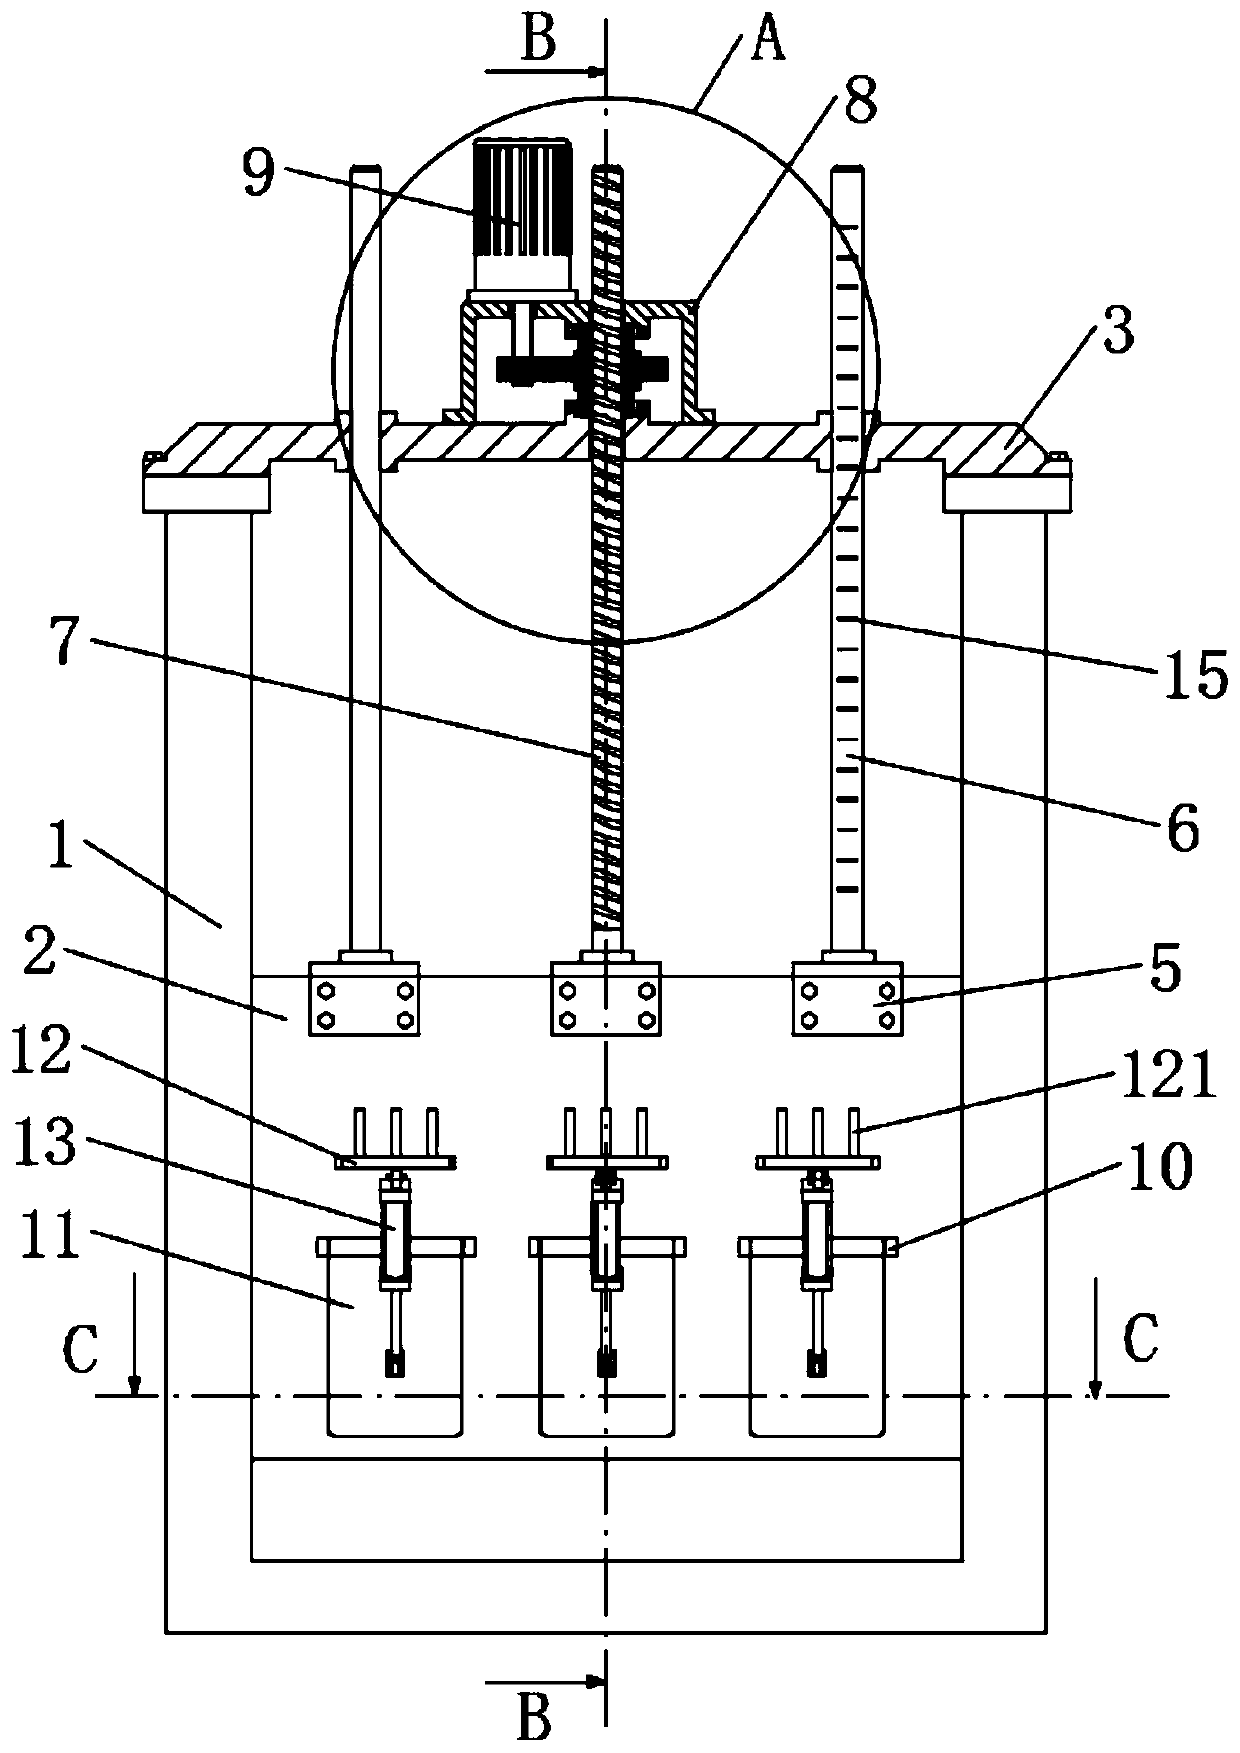 Asymptotic hydraulic engineering gate lifting device